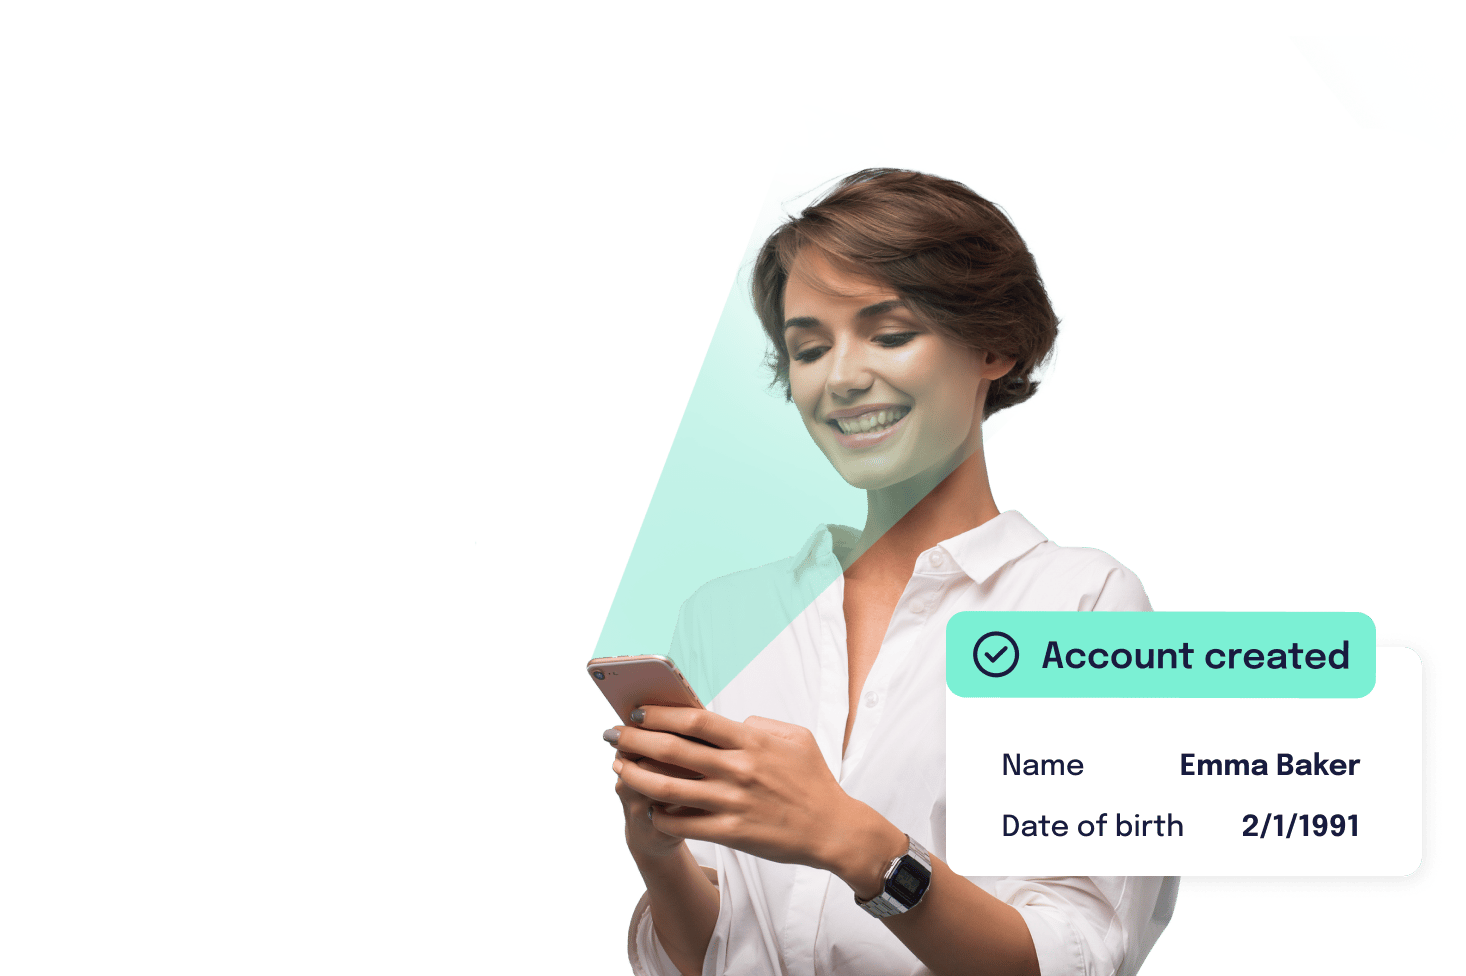 Telco_new-account-created_Trustmatic